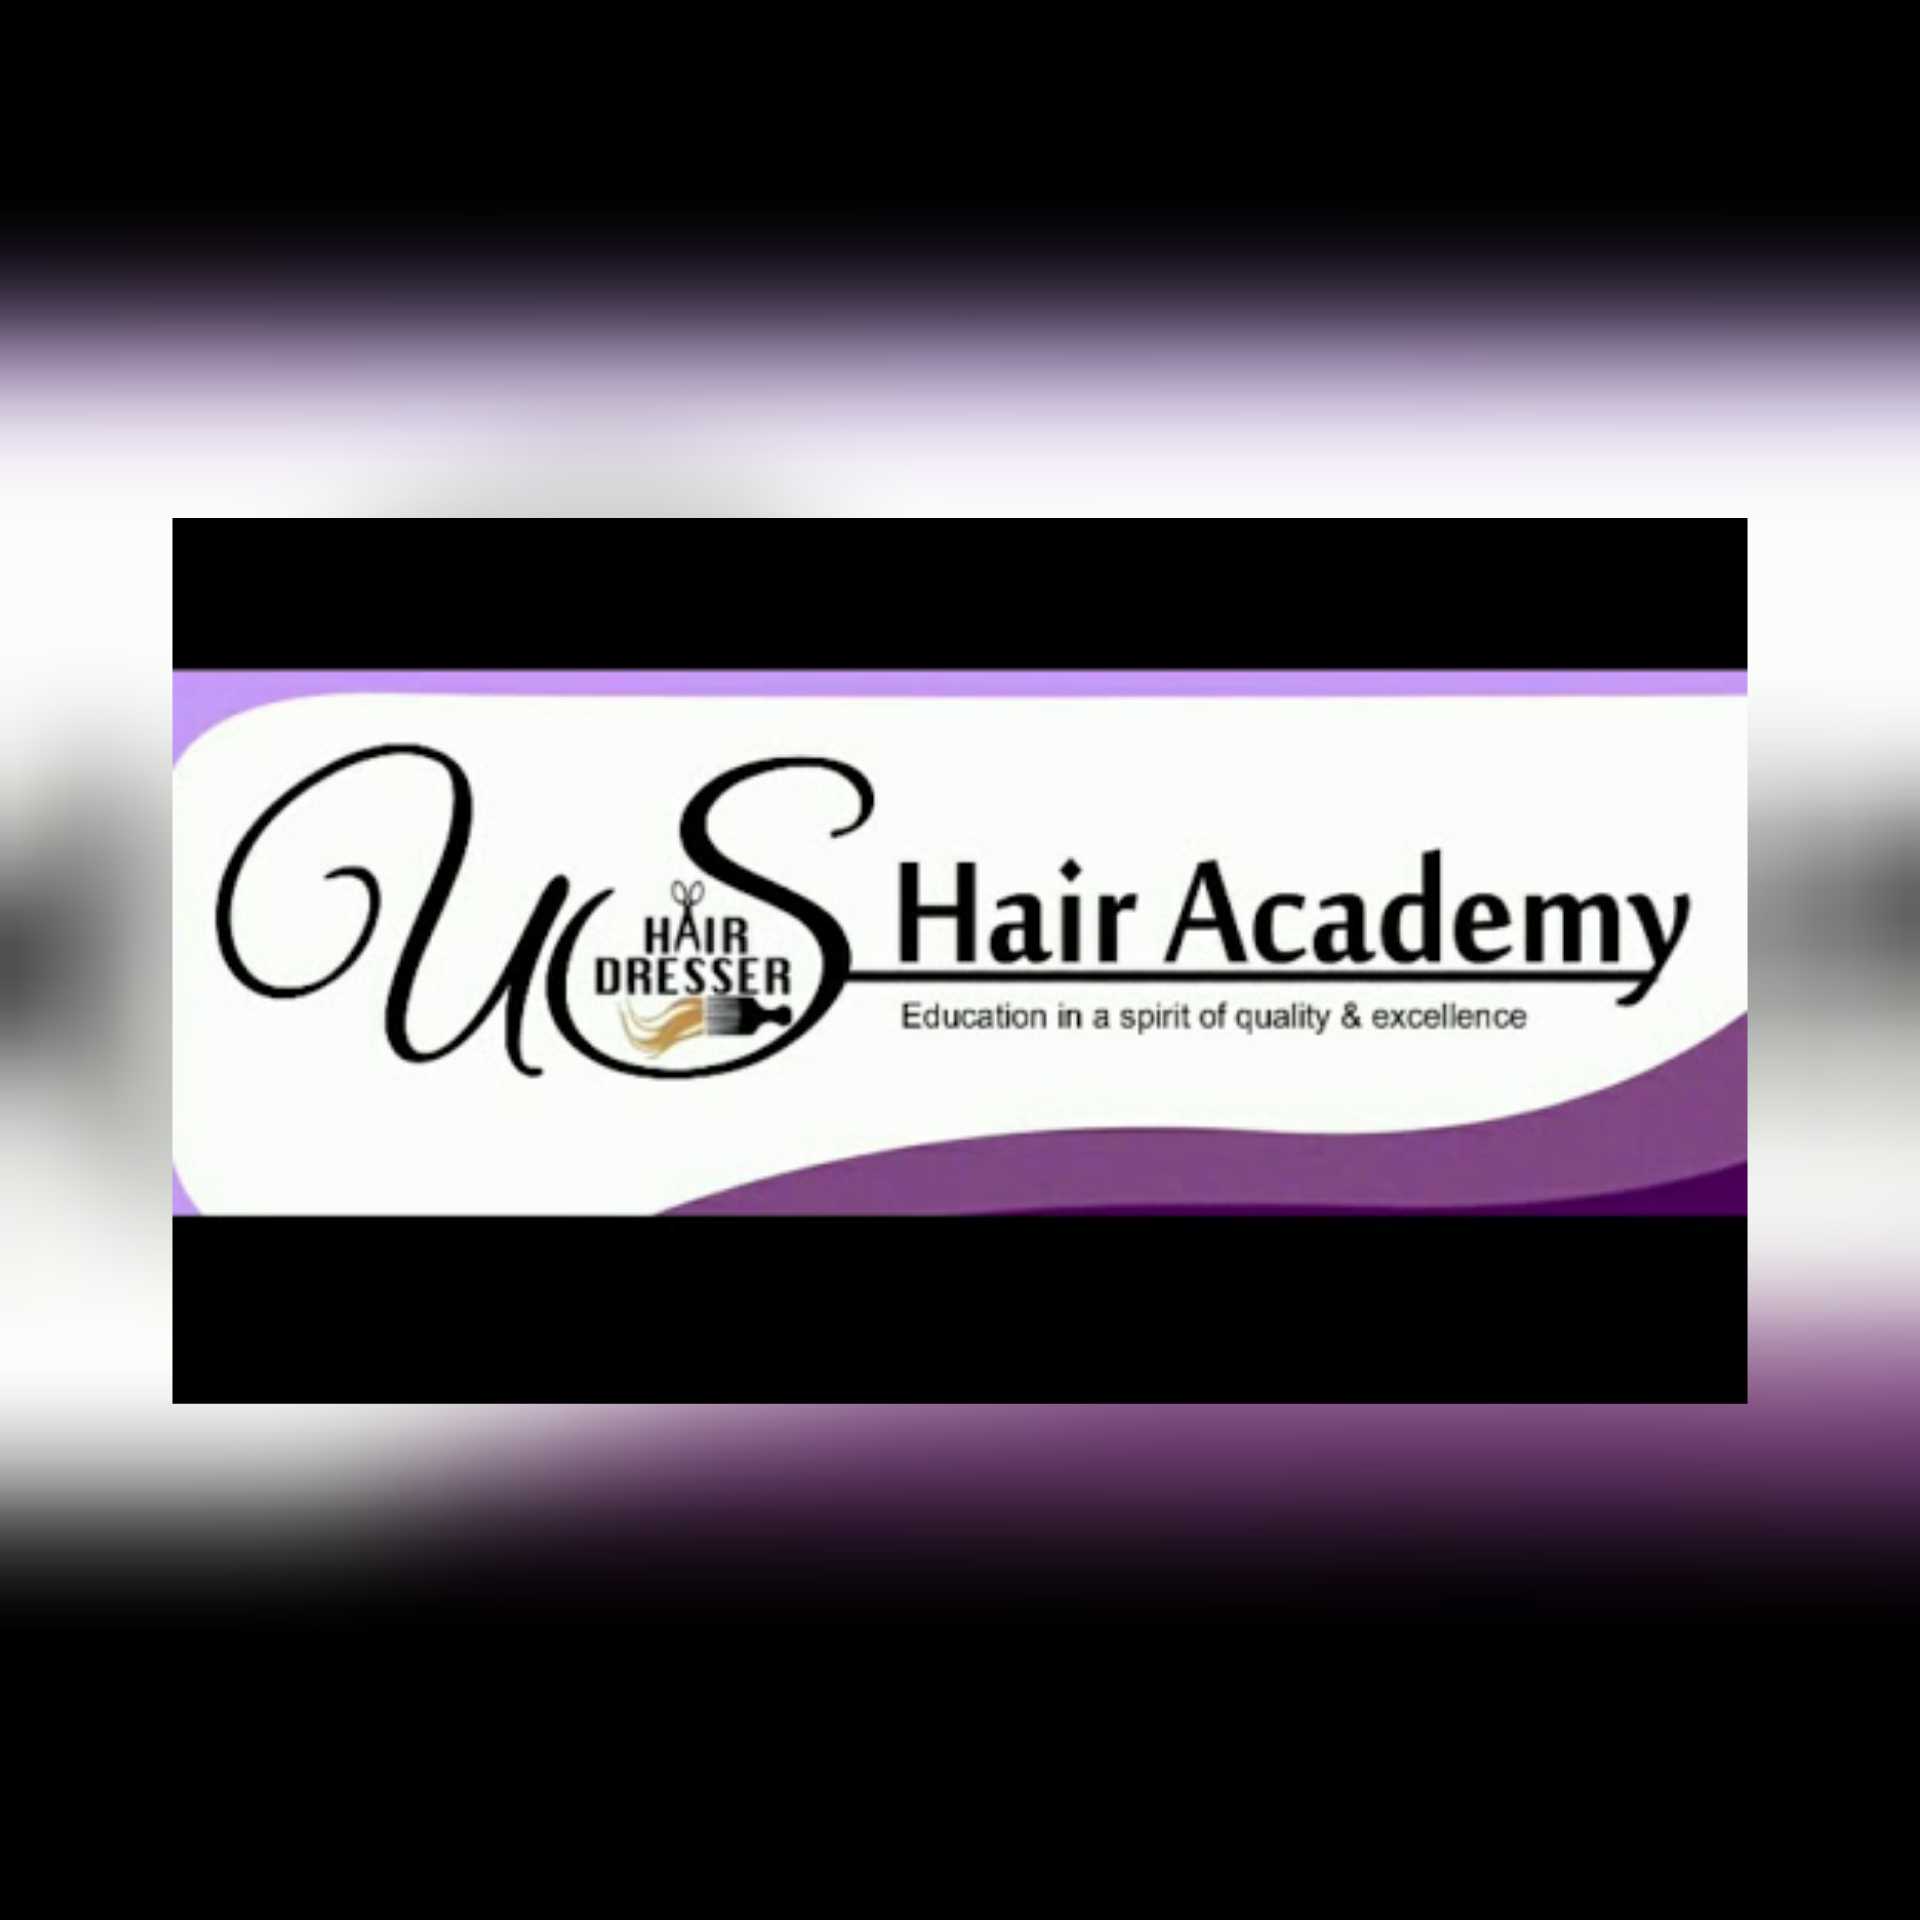 Us Hair Academy in Chembur East, Mumbai-400074 | Sulekha Mumbai